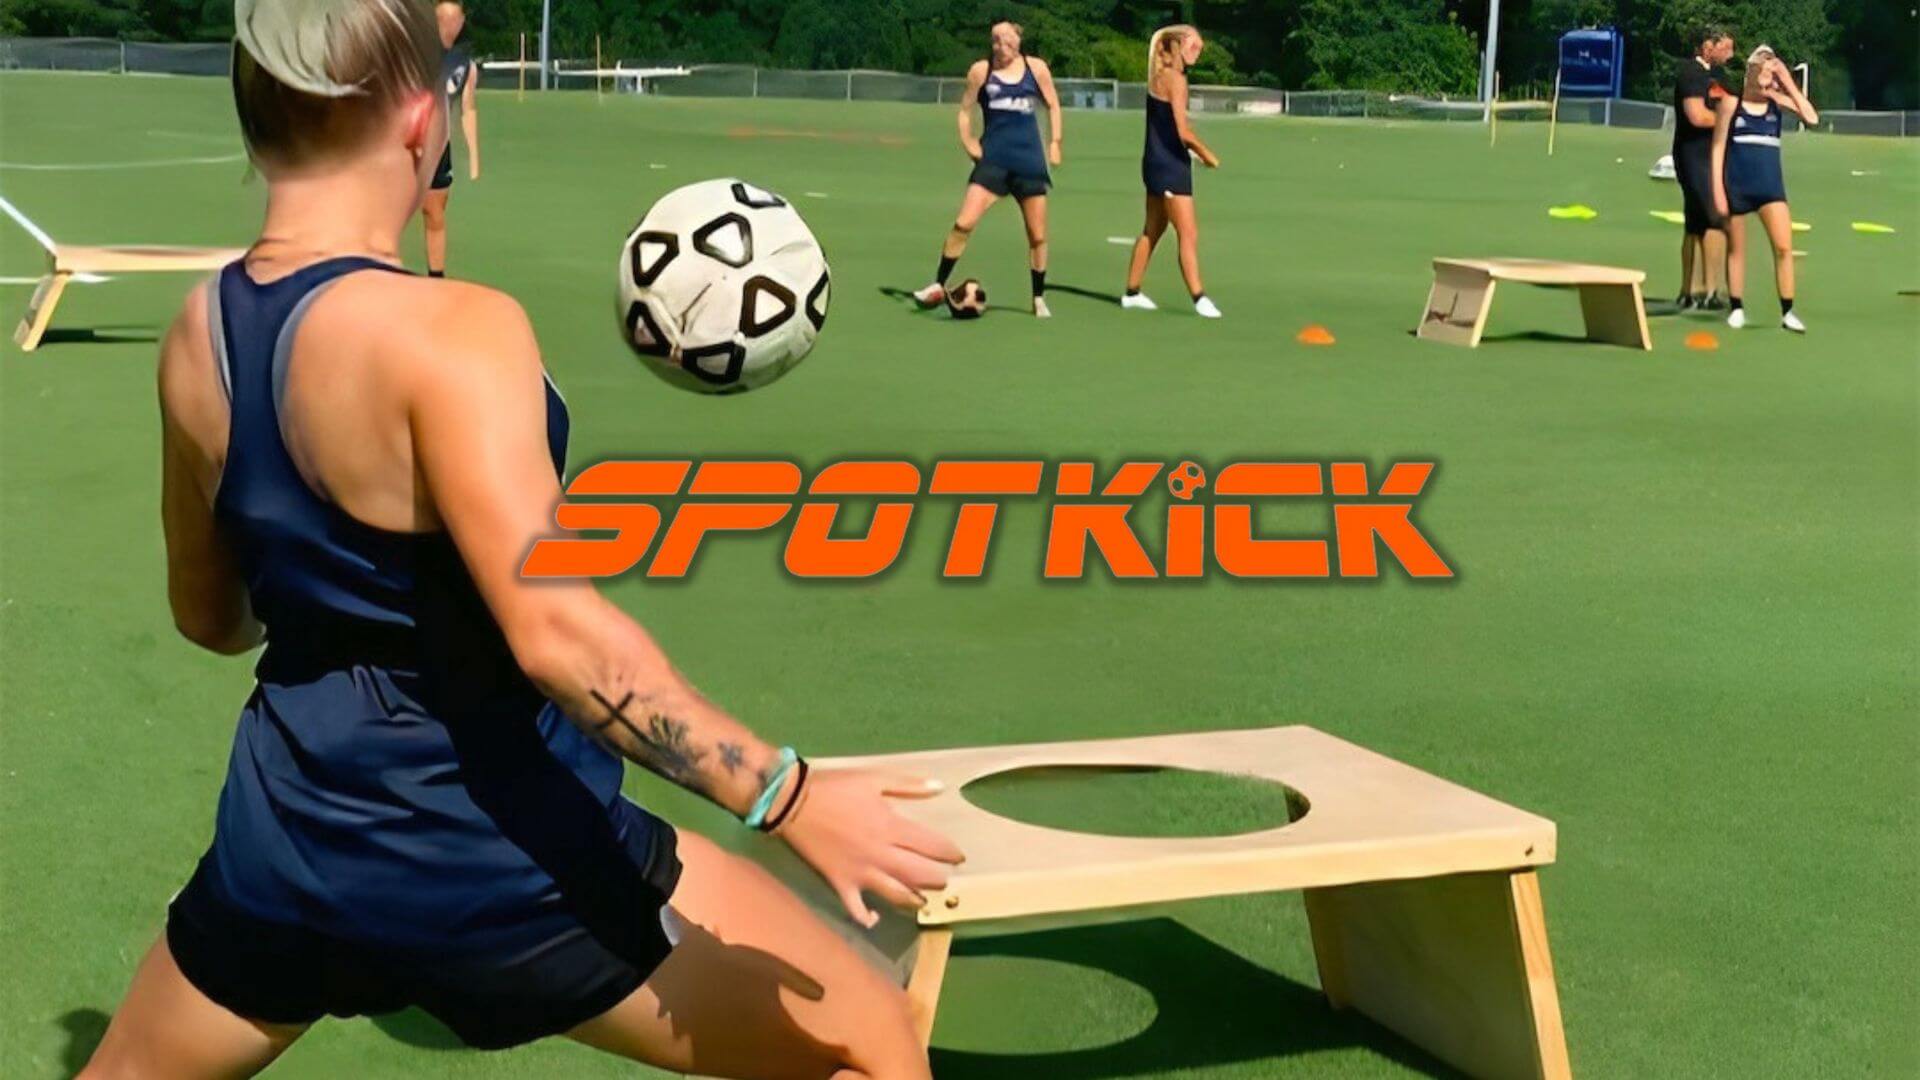 Spotkick game used during training